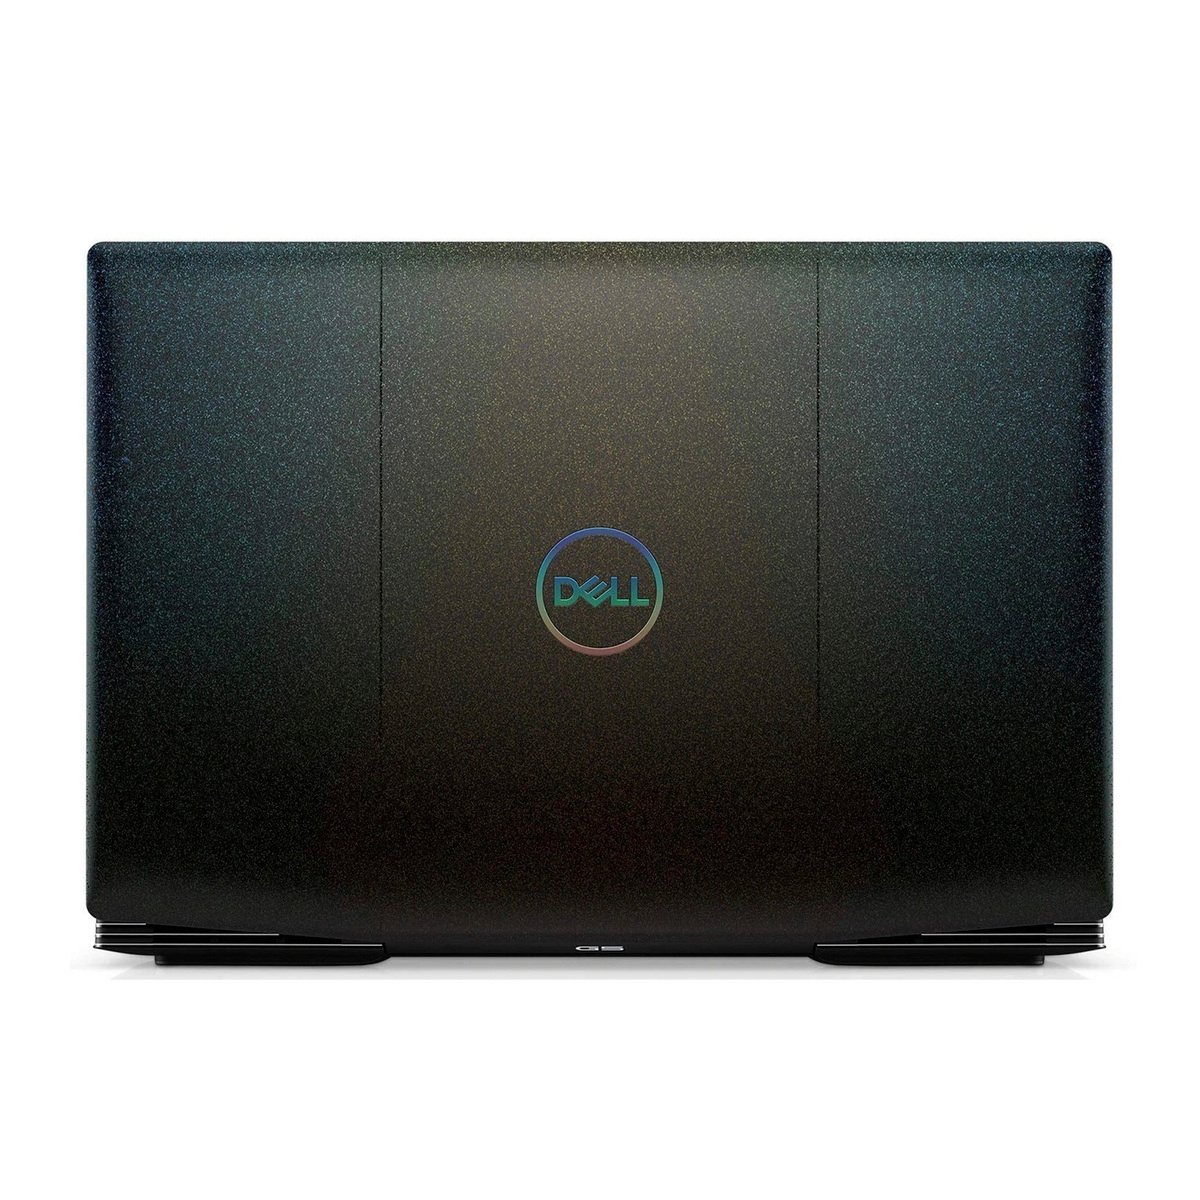 Dell G5-5500-E1700 15.6" FHD Gaming Laptop, 144Hz Refresh Rate, Intel Core i7 10750H 2.60 Ghz, 16GB RAM, 512 SSD, 6GB NVIDIA Graphics GTX 1660, Windows 10 Home - Black I 5500-G5-E1700-BLKC